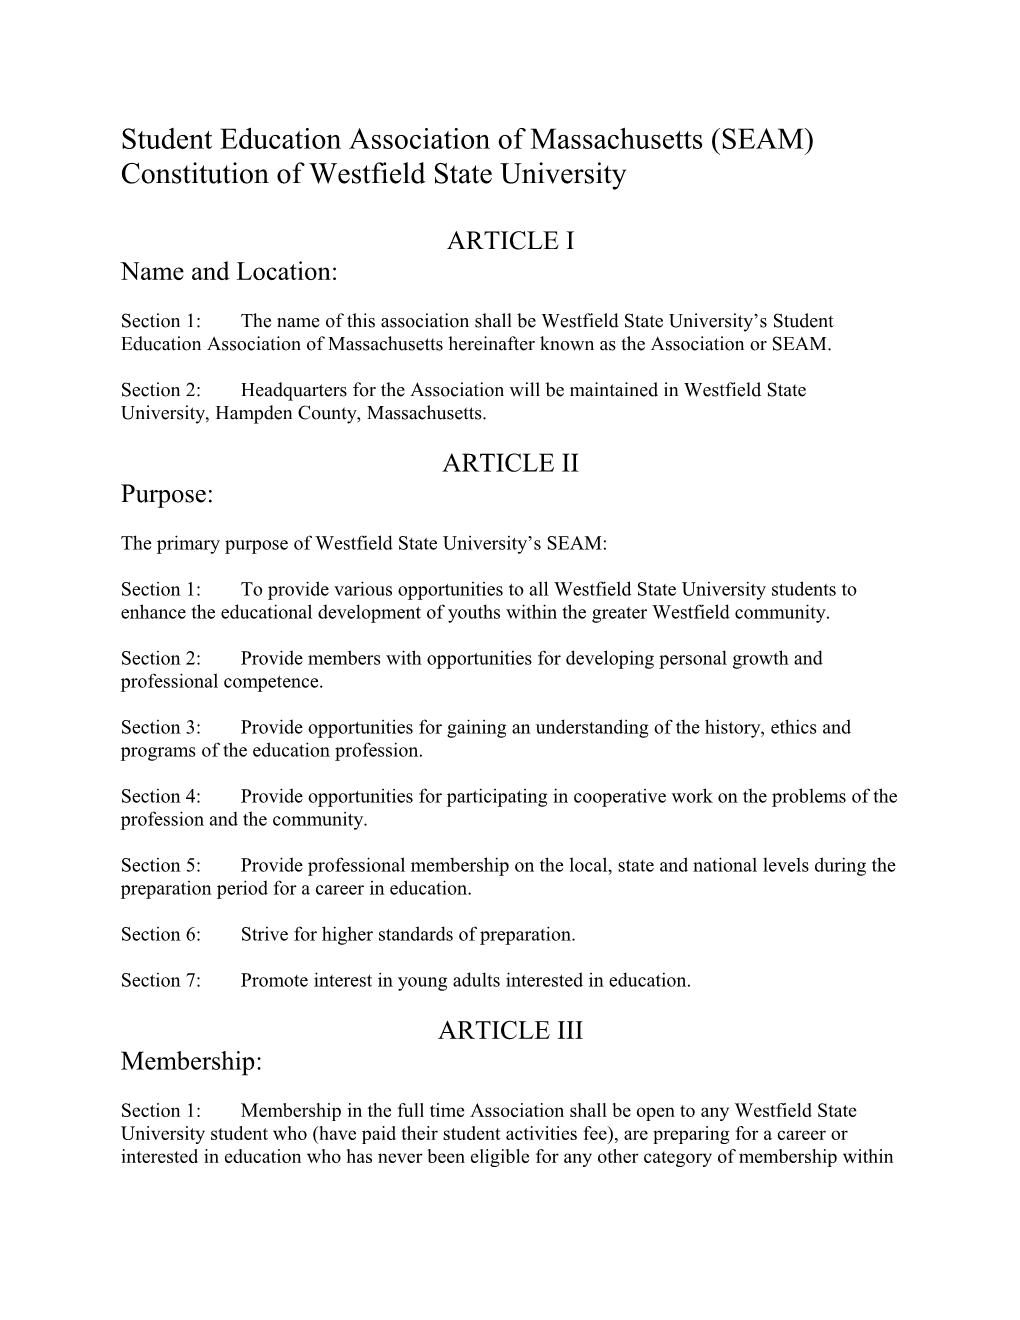 Student Education Association of Massachusetts (SEAM) Constitution of Westfield State University